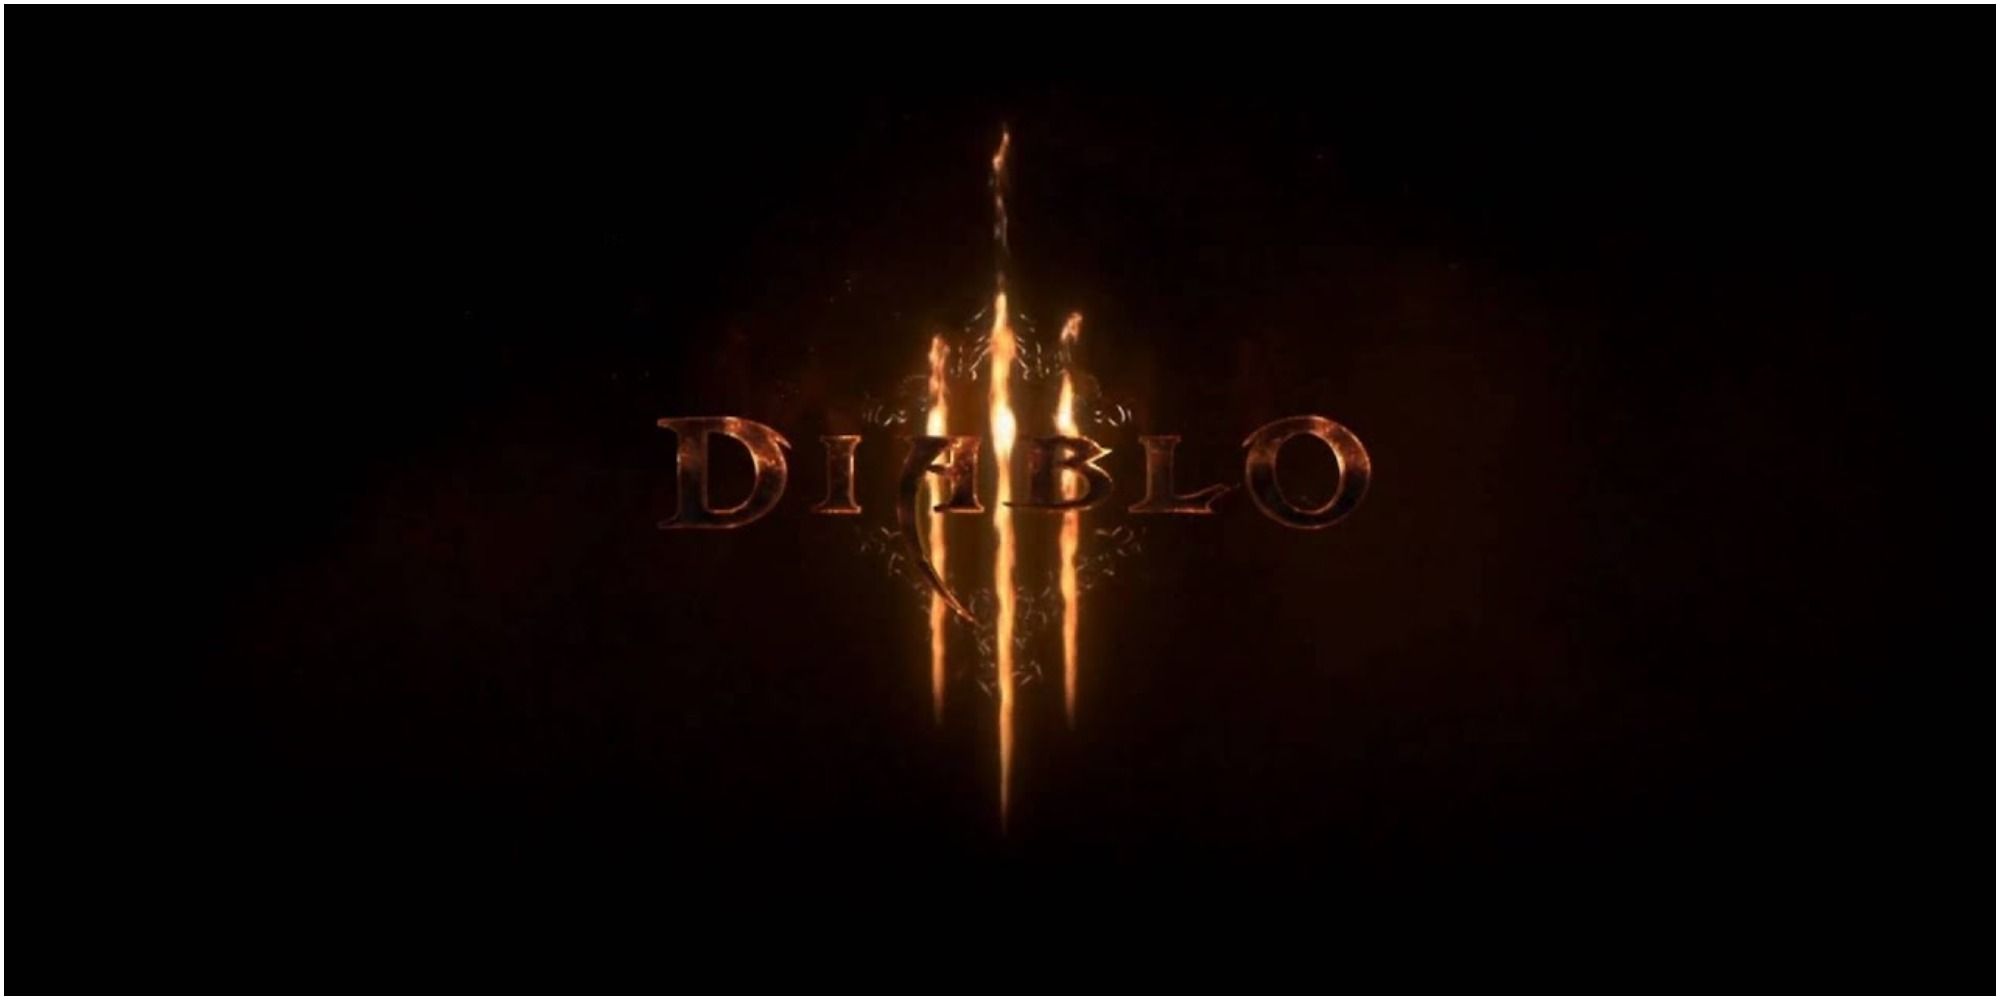 Diablo 3 Logo After The Cinematic